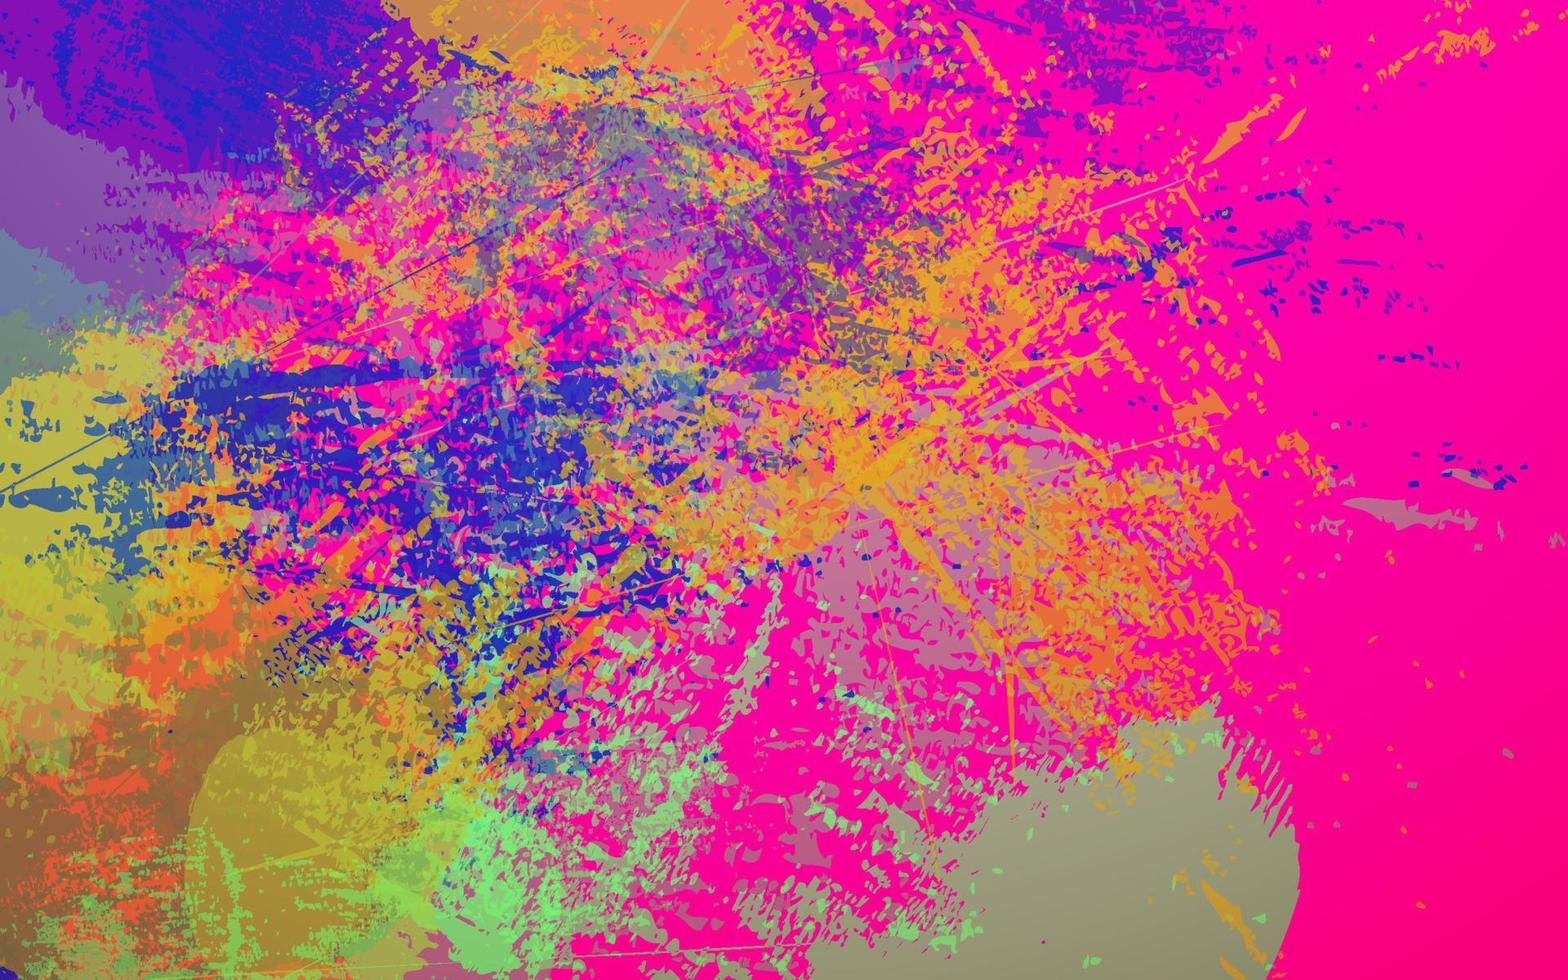 abstract grunge texture vecteur de fond multicolore